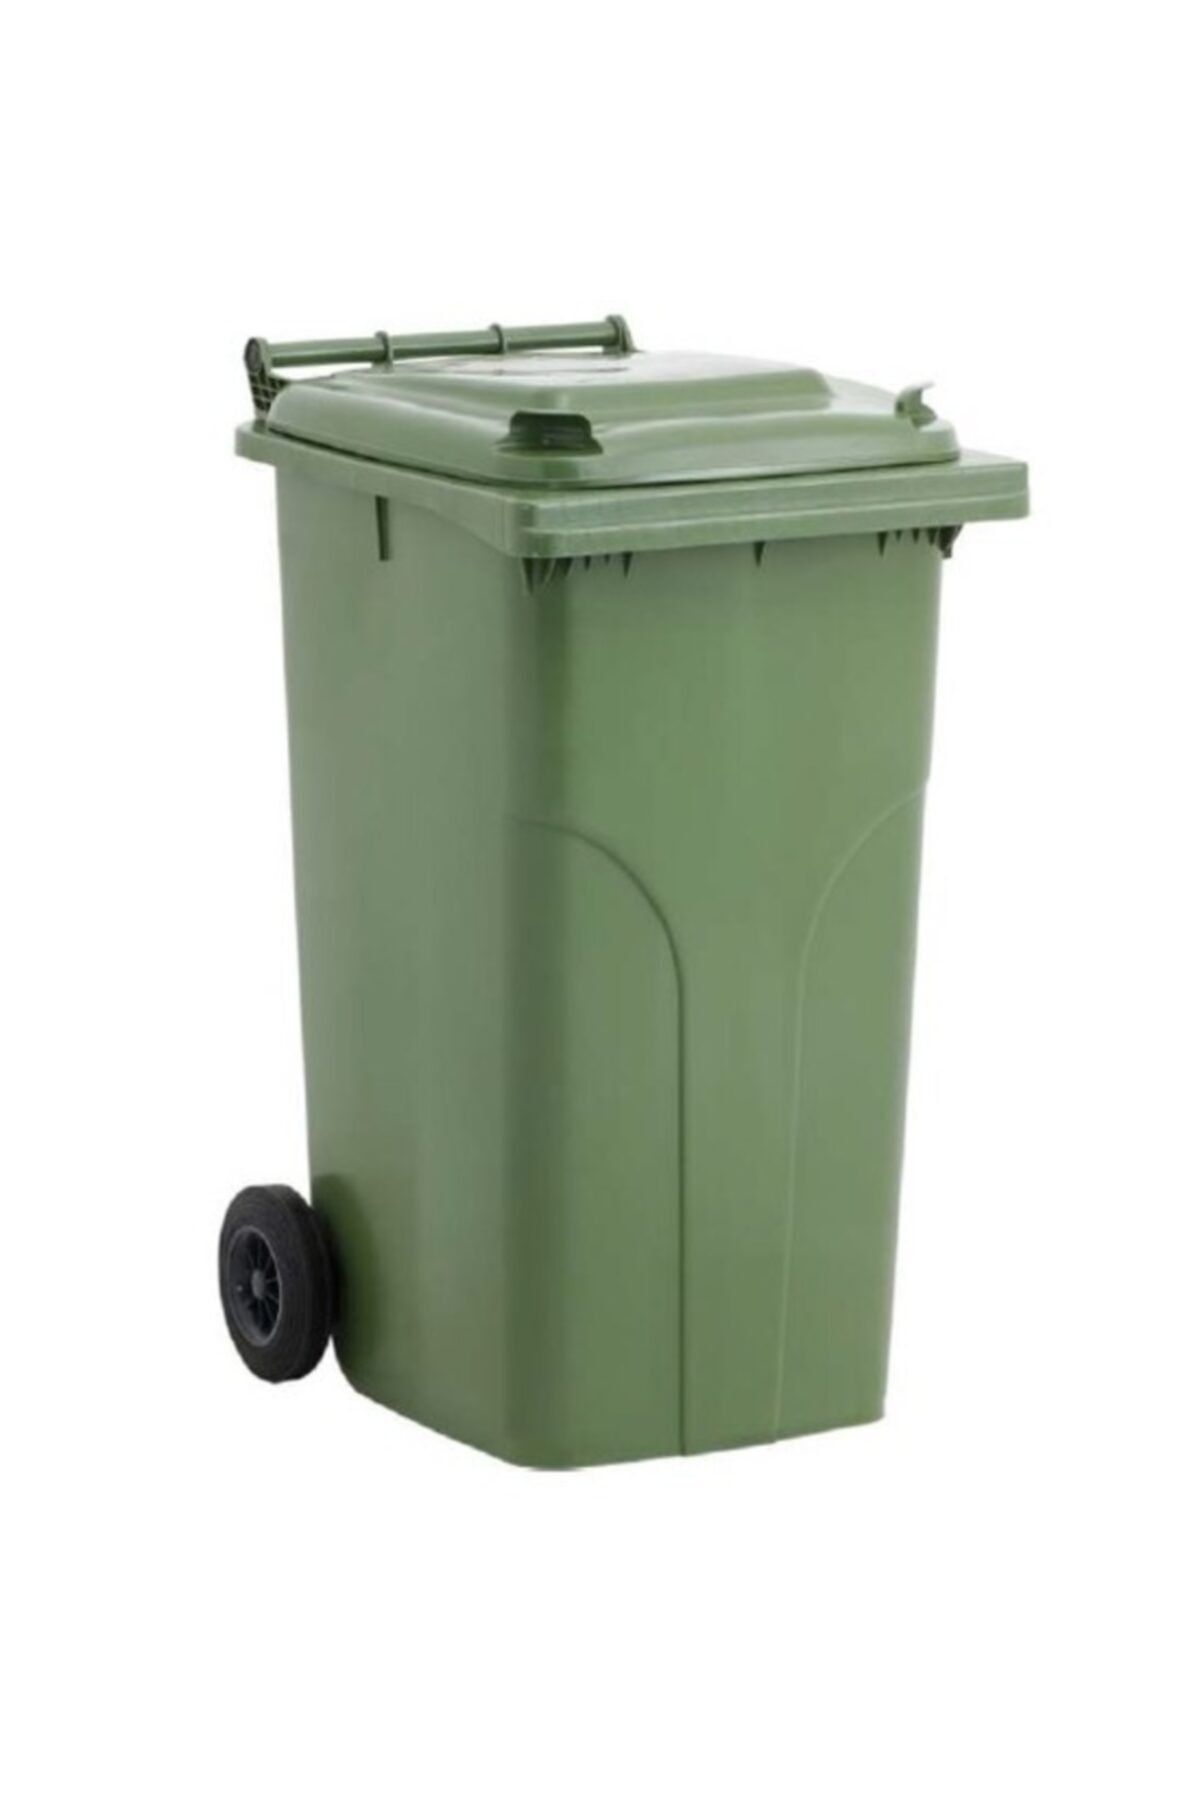 SCRATCH ANET Yeşil Plastik Çöp Konteyneri 240 Lt